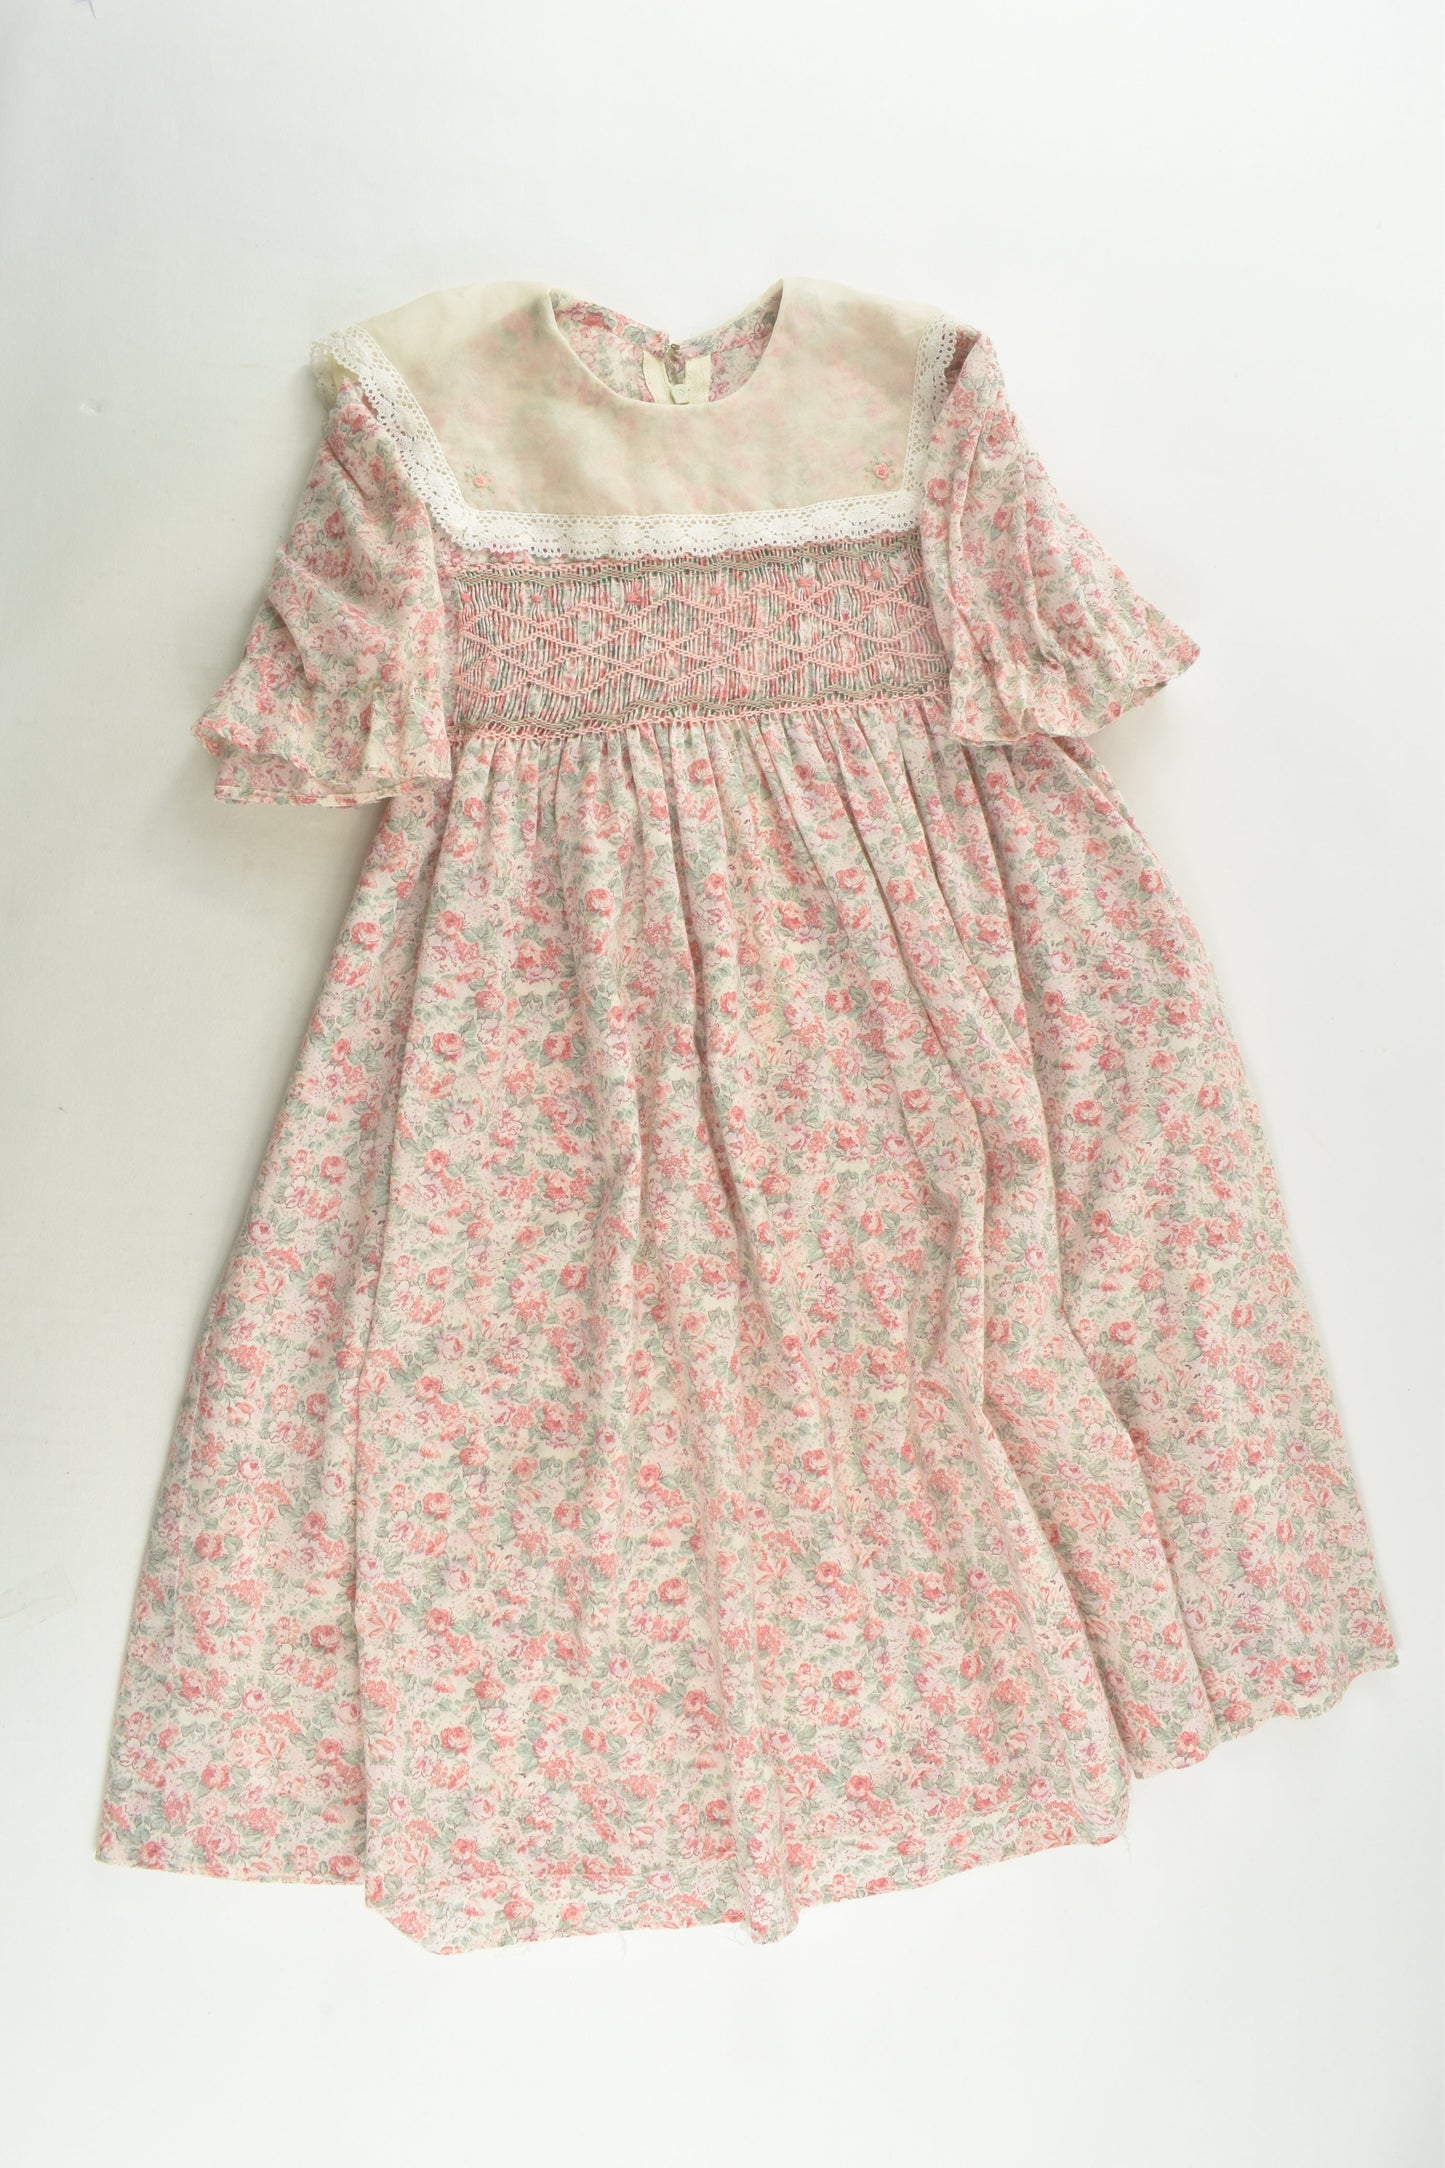 Handmade Size approx 6 Vintage Smocked Dress